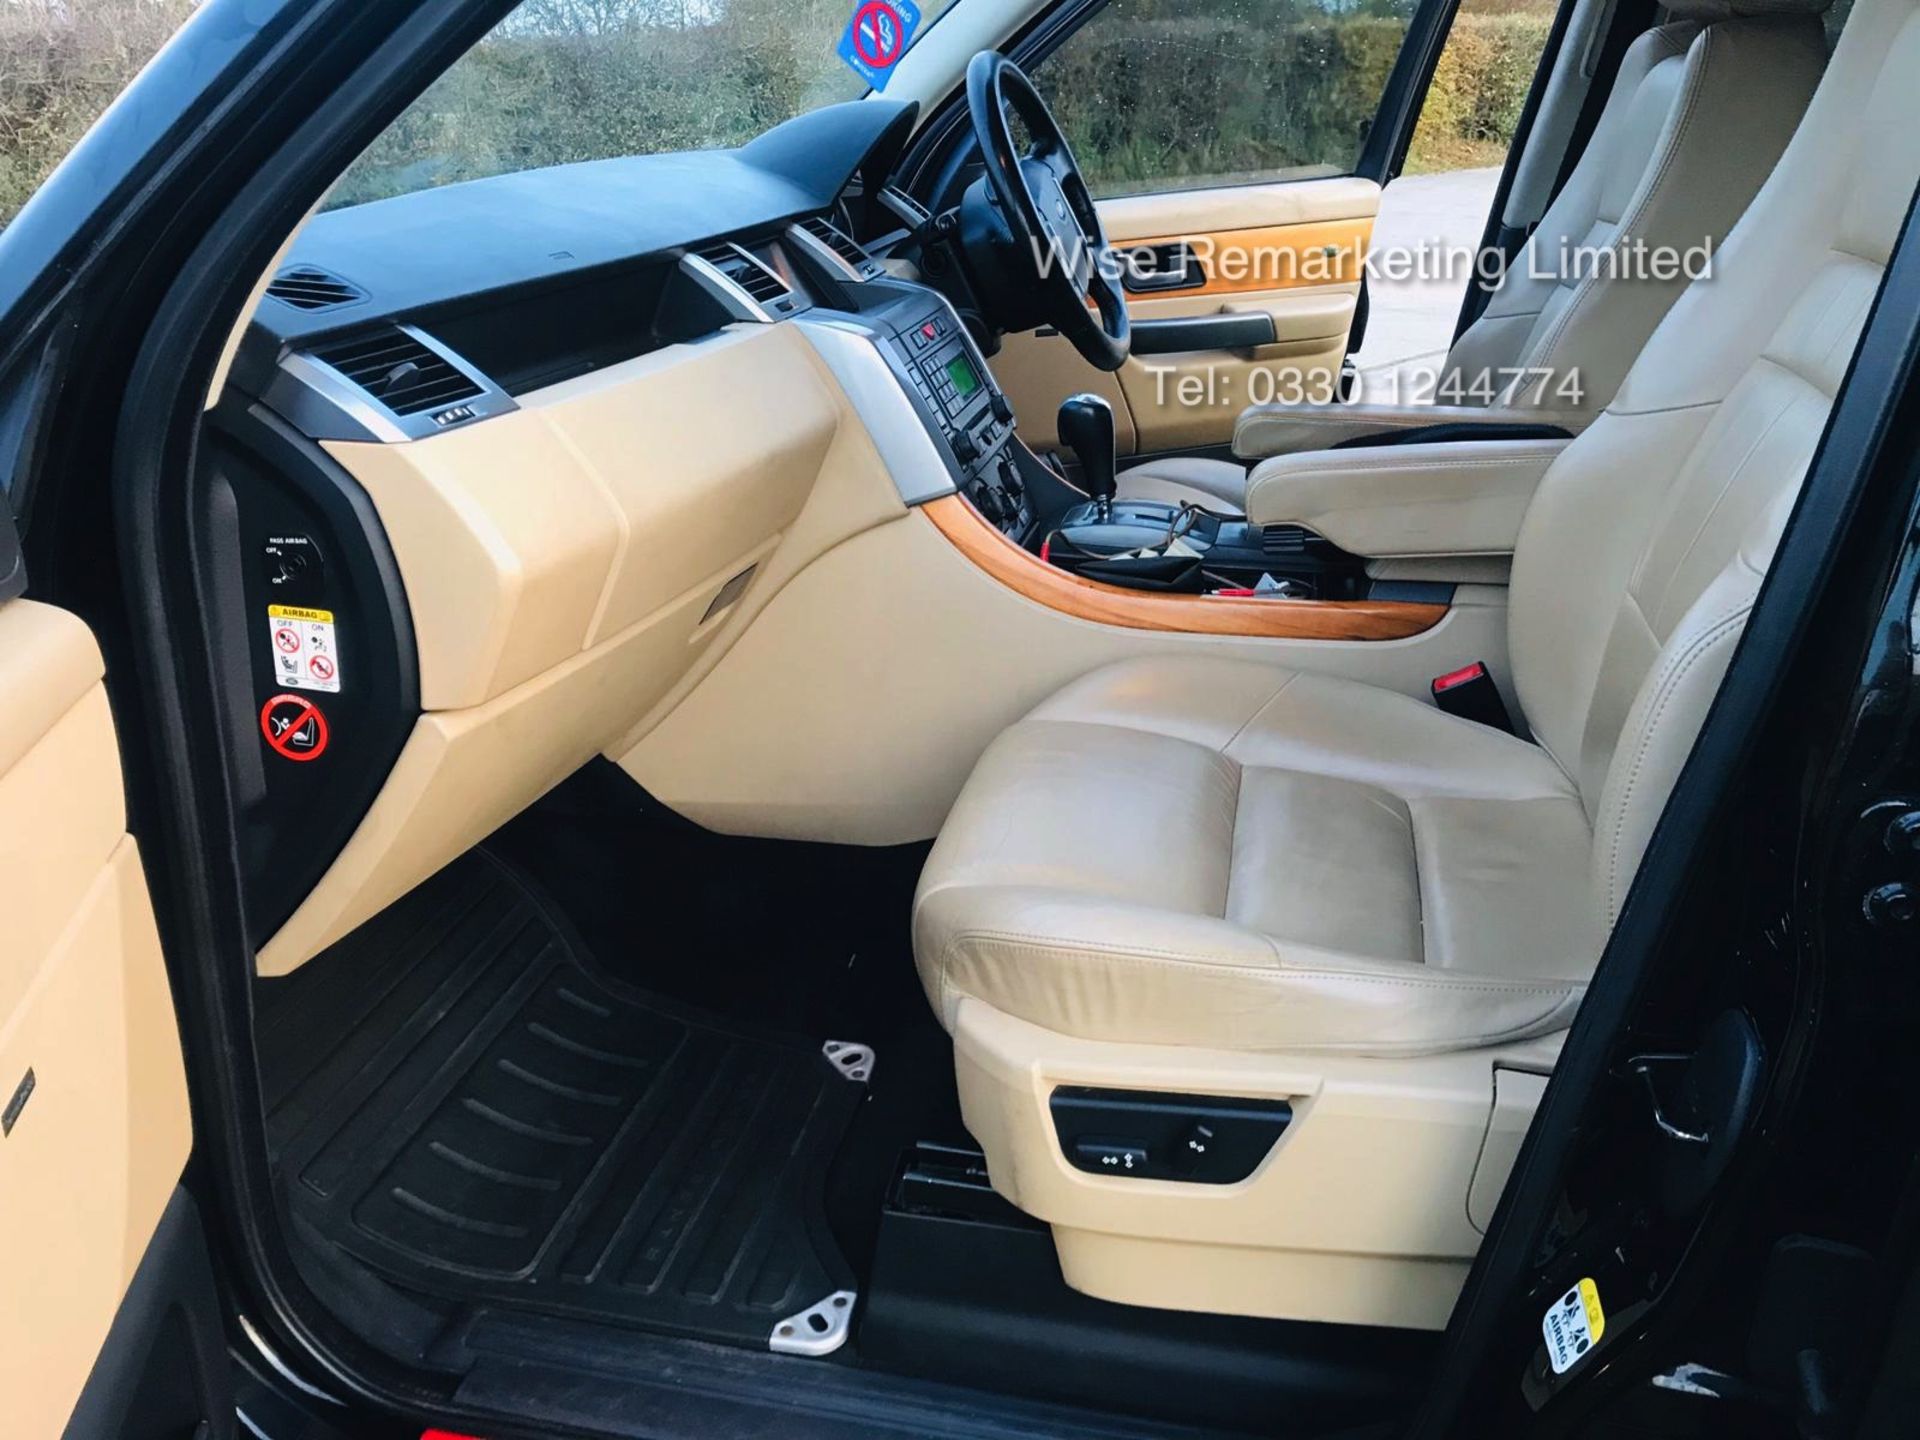 (Reserve Met) Range Rover Sport 2.7 TDV6 HSE Auto - 2007 Model - Full Leather - TV Screens - Sat Nav - Image 10 of 21